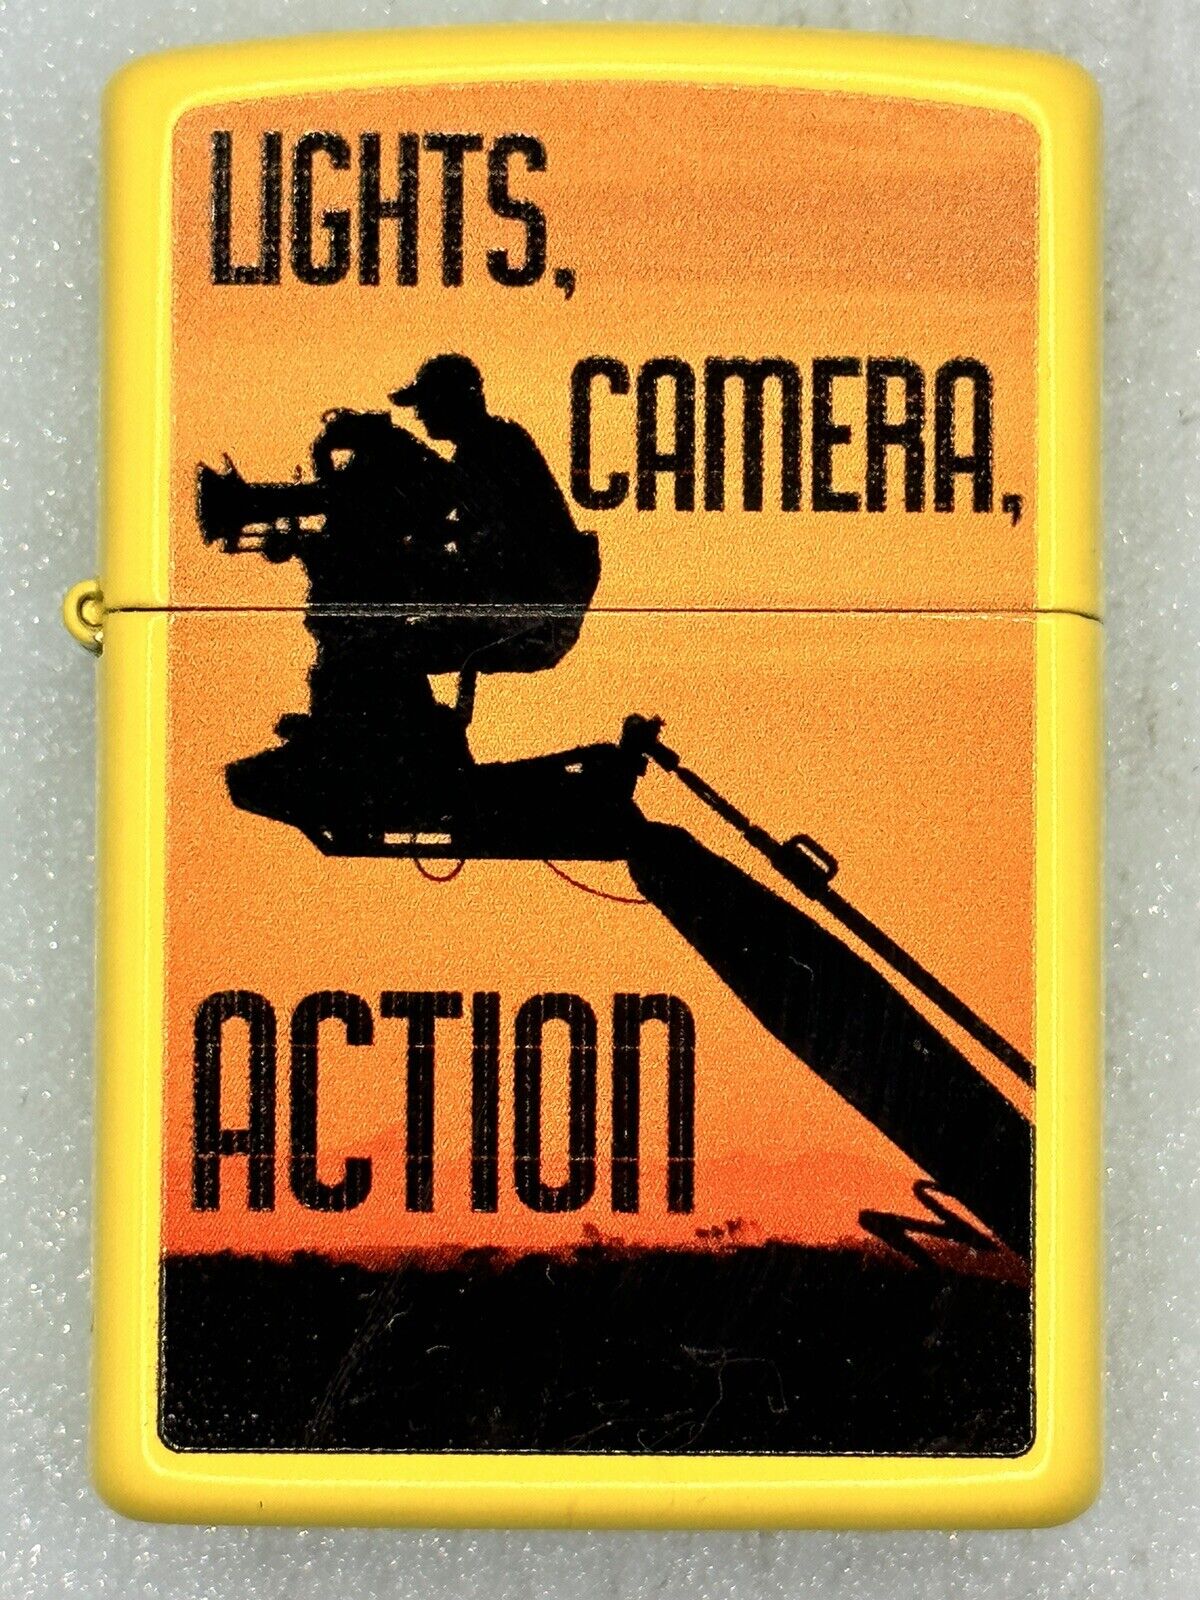 2017 Lights Camera Action Yellow Zippo Lighter NEW